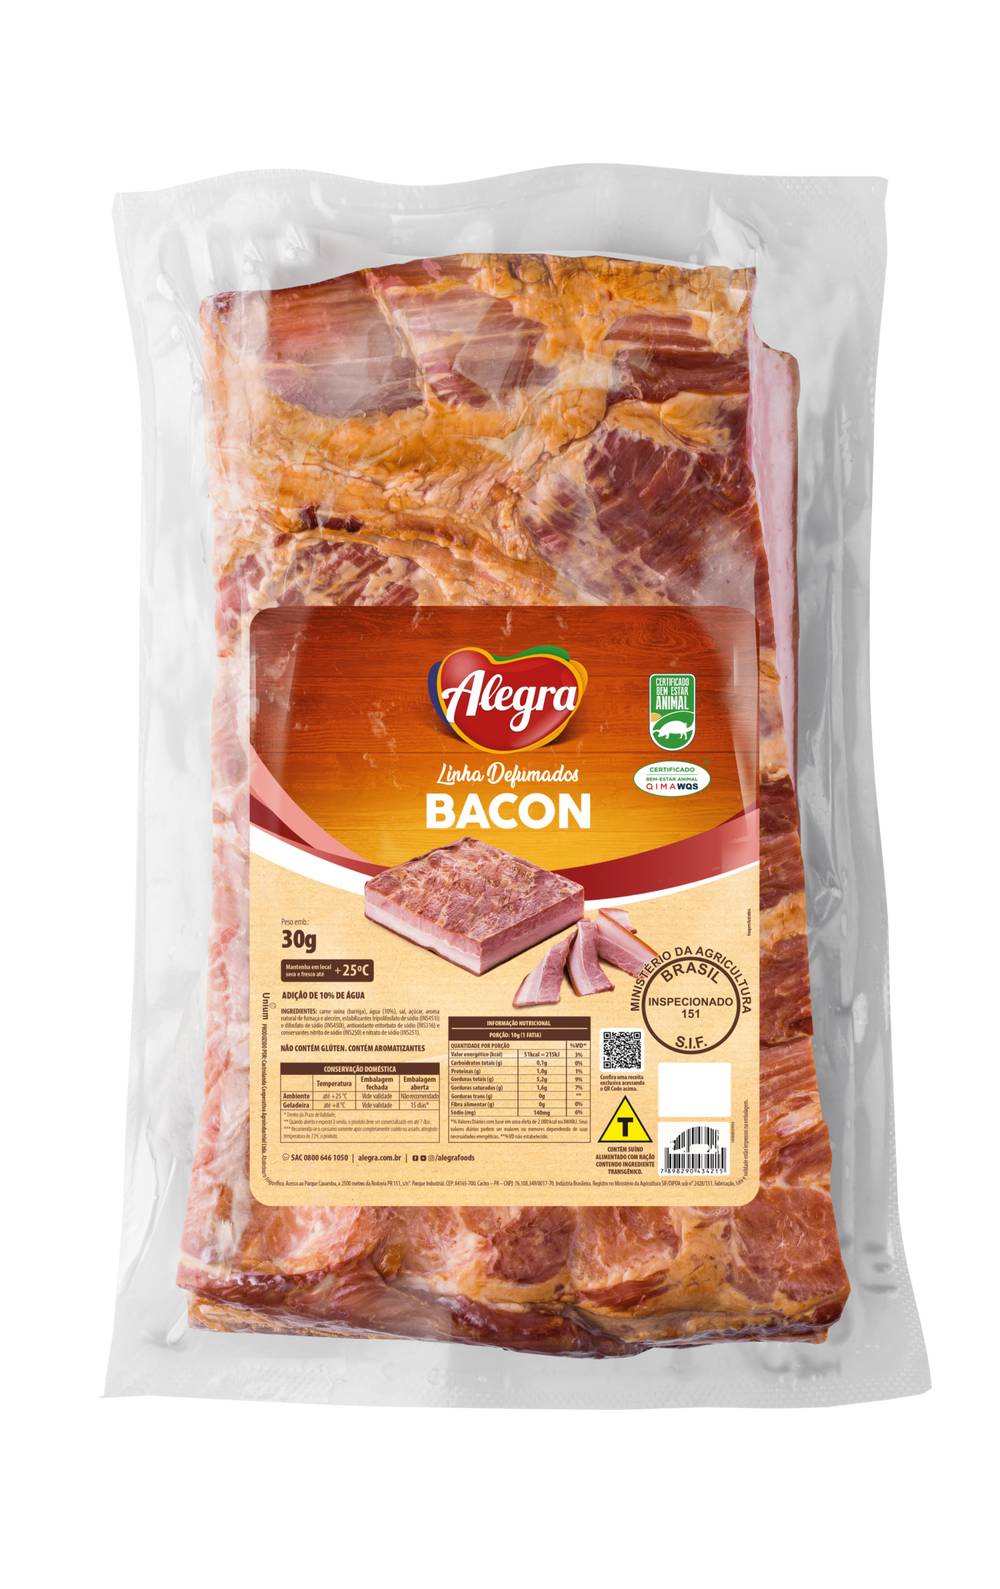 Alegra Bacon (Peça 2,17 kg aprox)